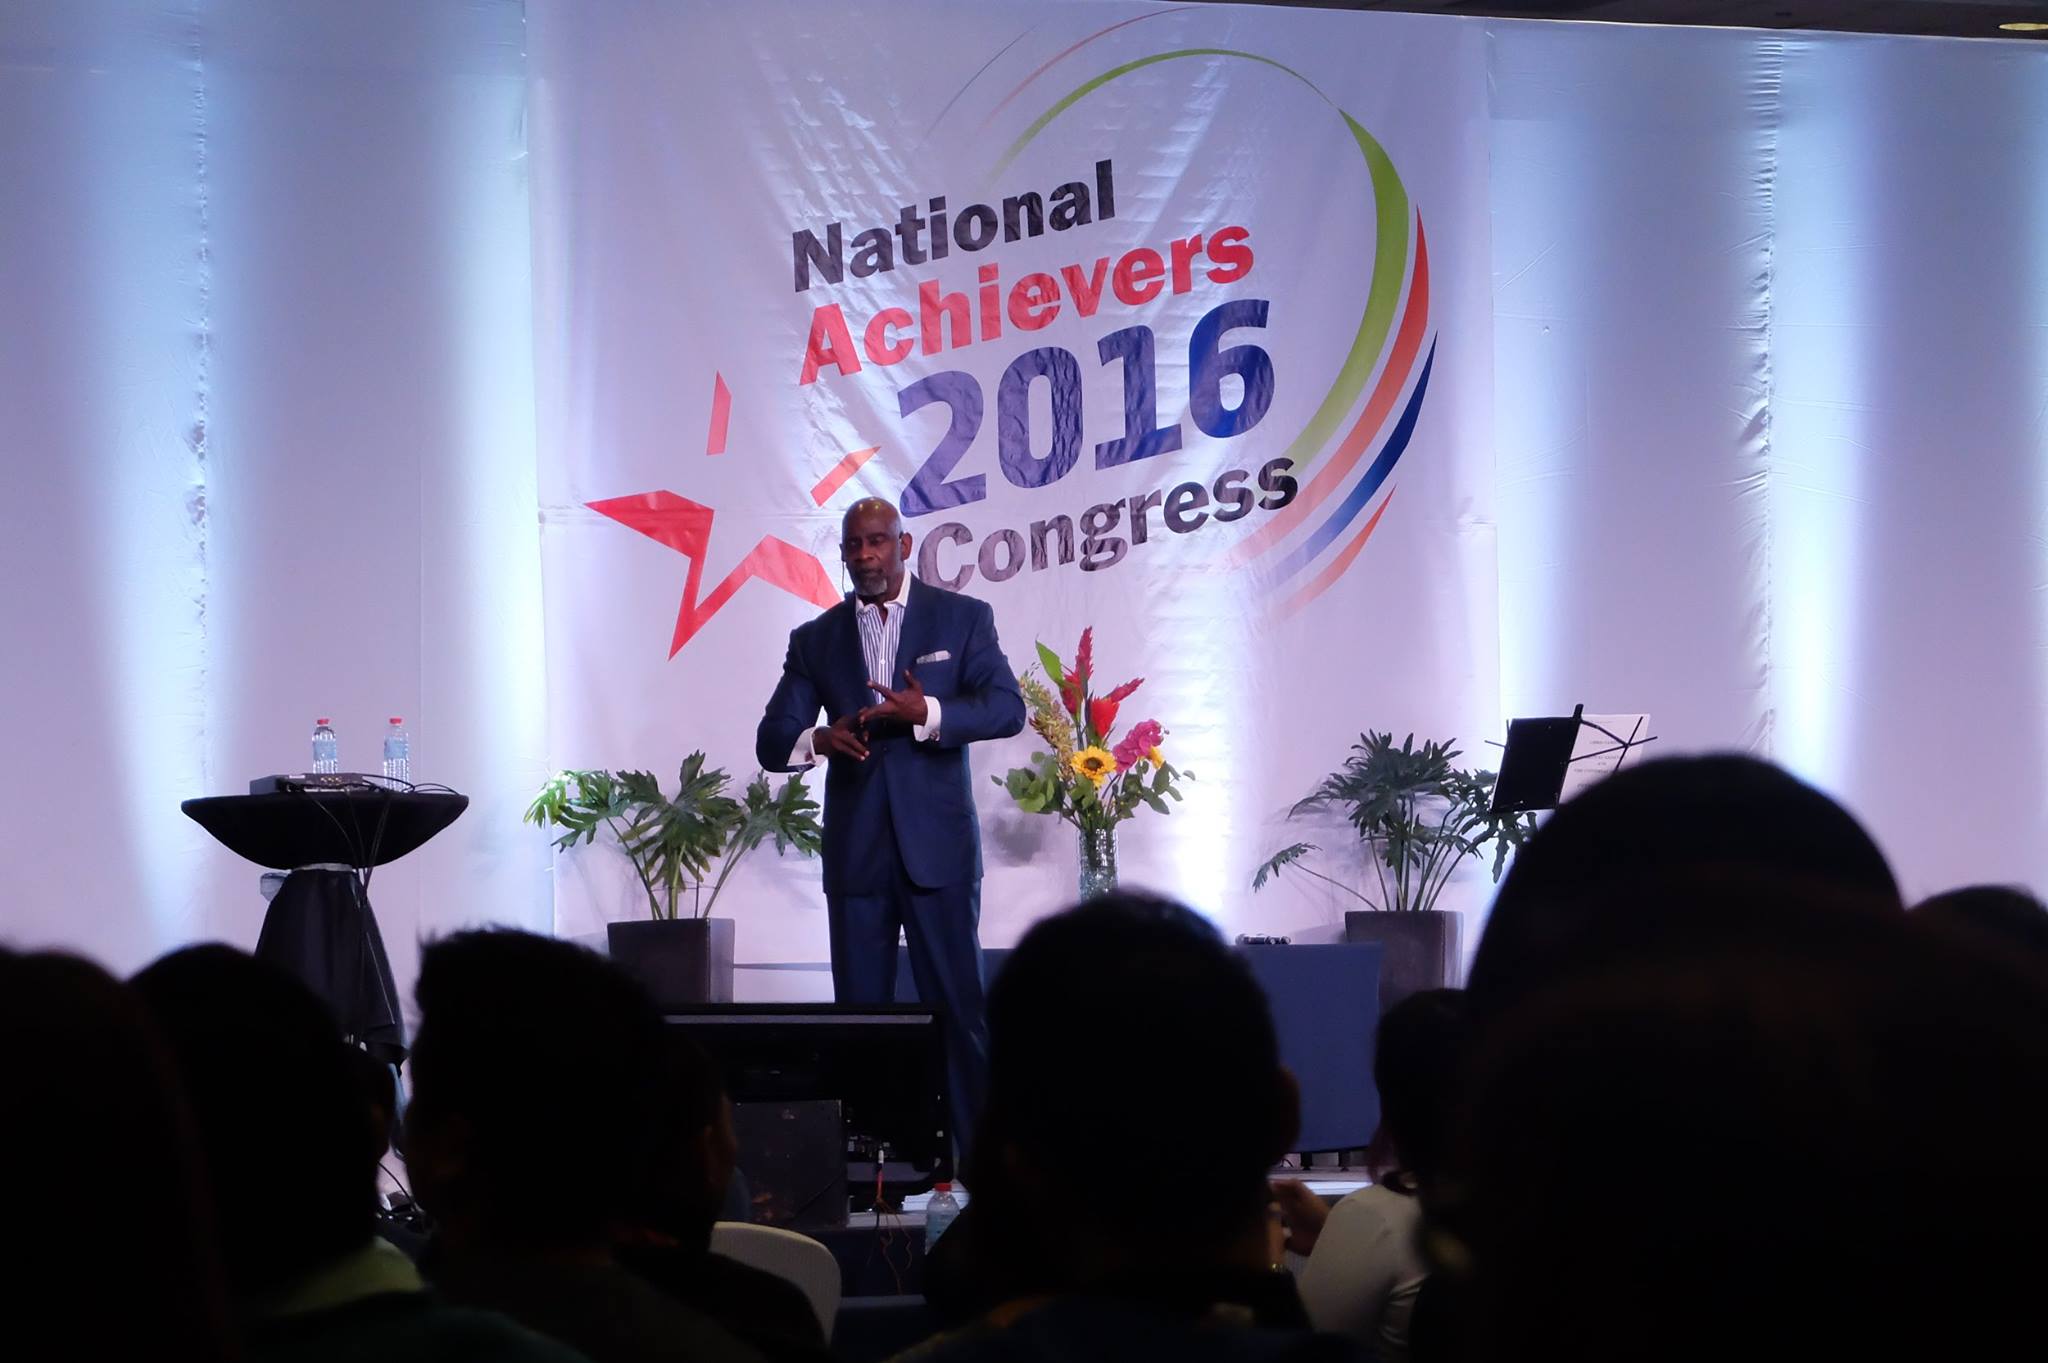 Chris Gardner Keynote Speaker in the National Achievers Congress 2016